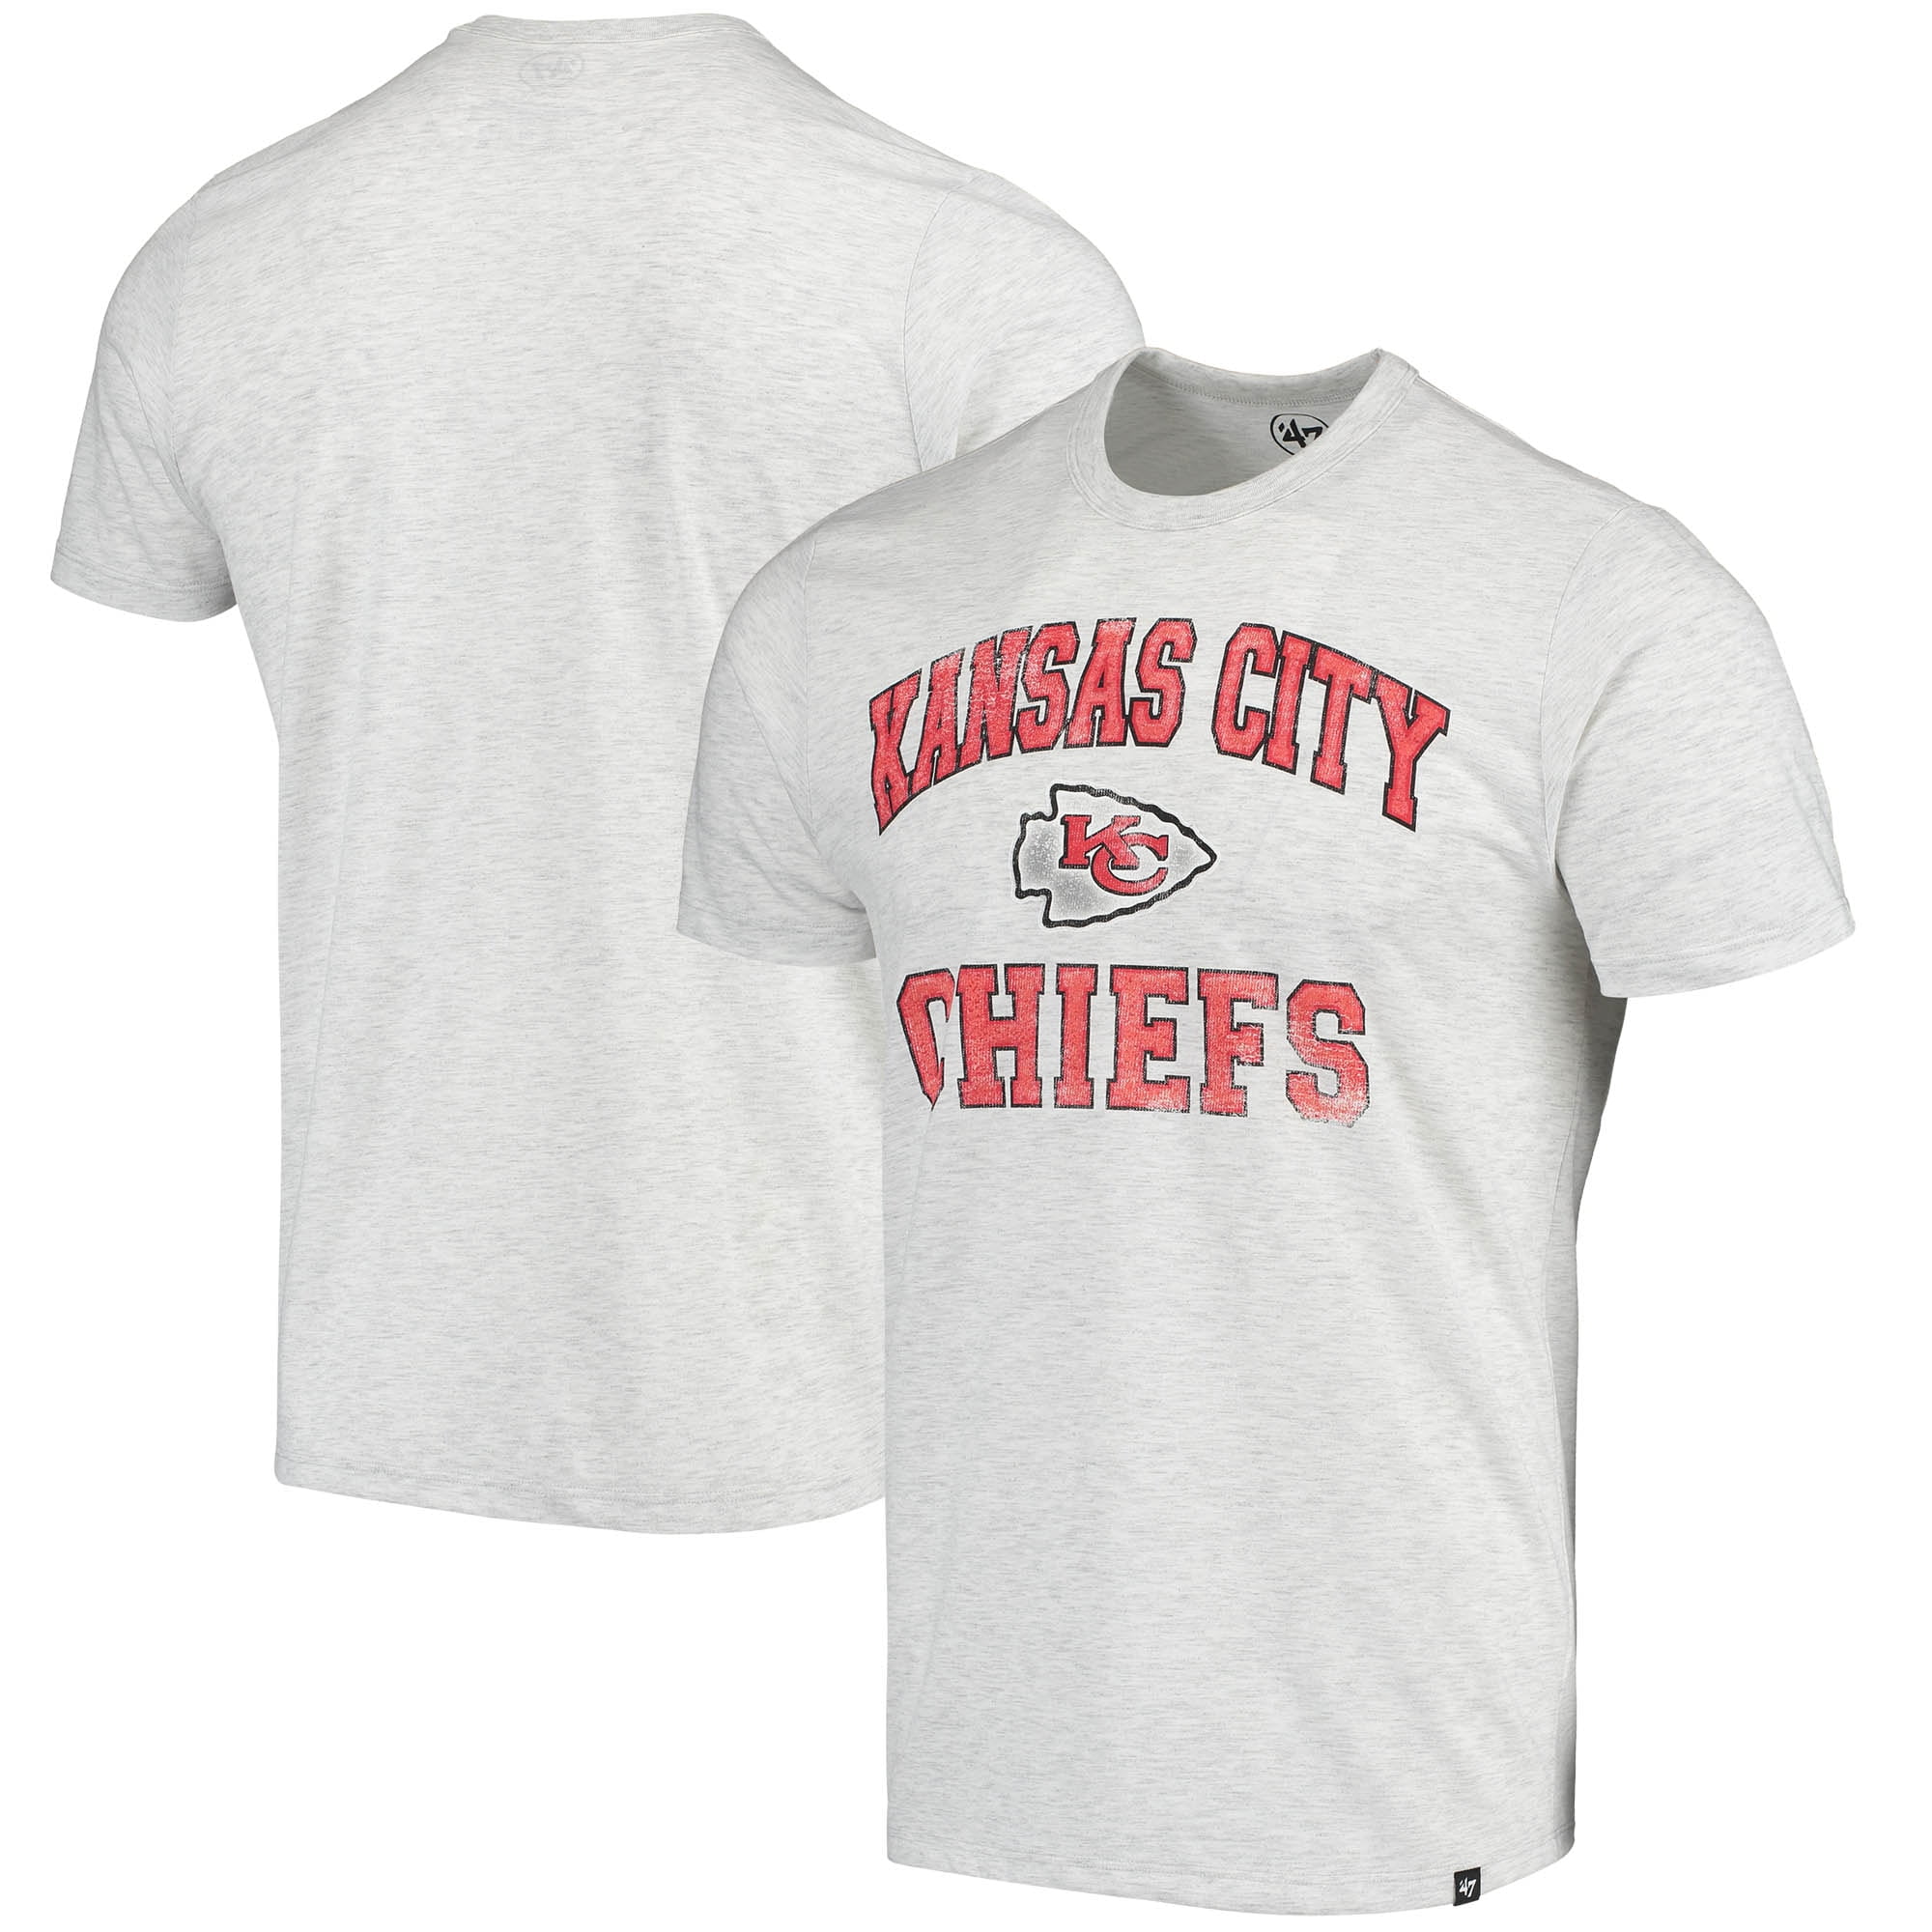 Kansas Graphic Tee Kansas City Shirt retro t-shirt retro style